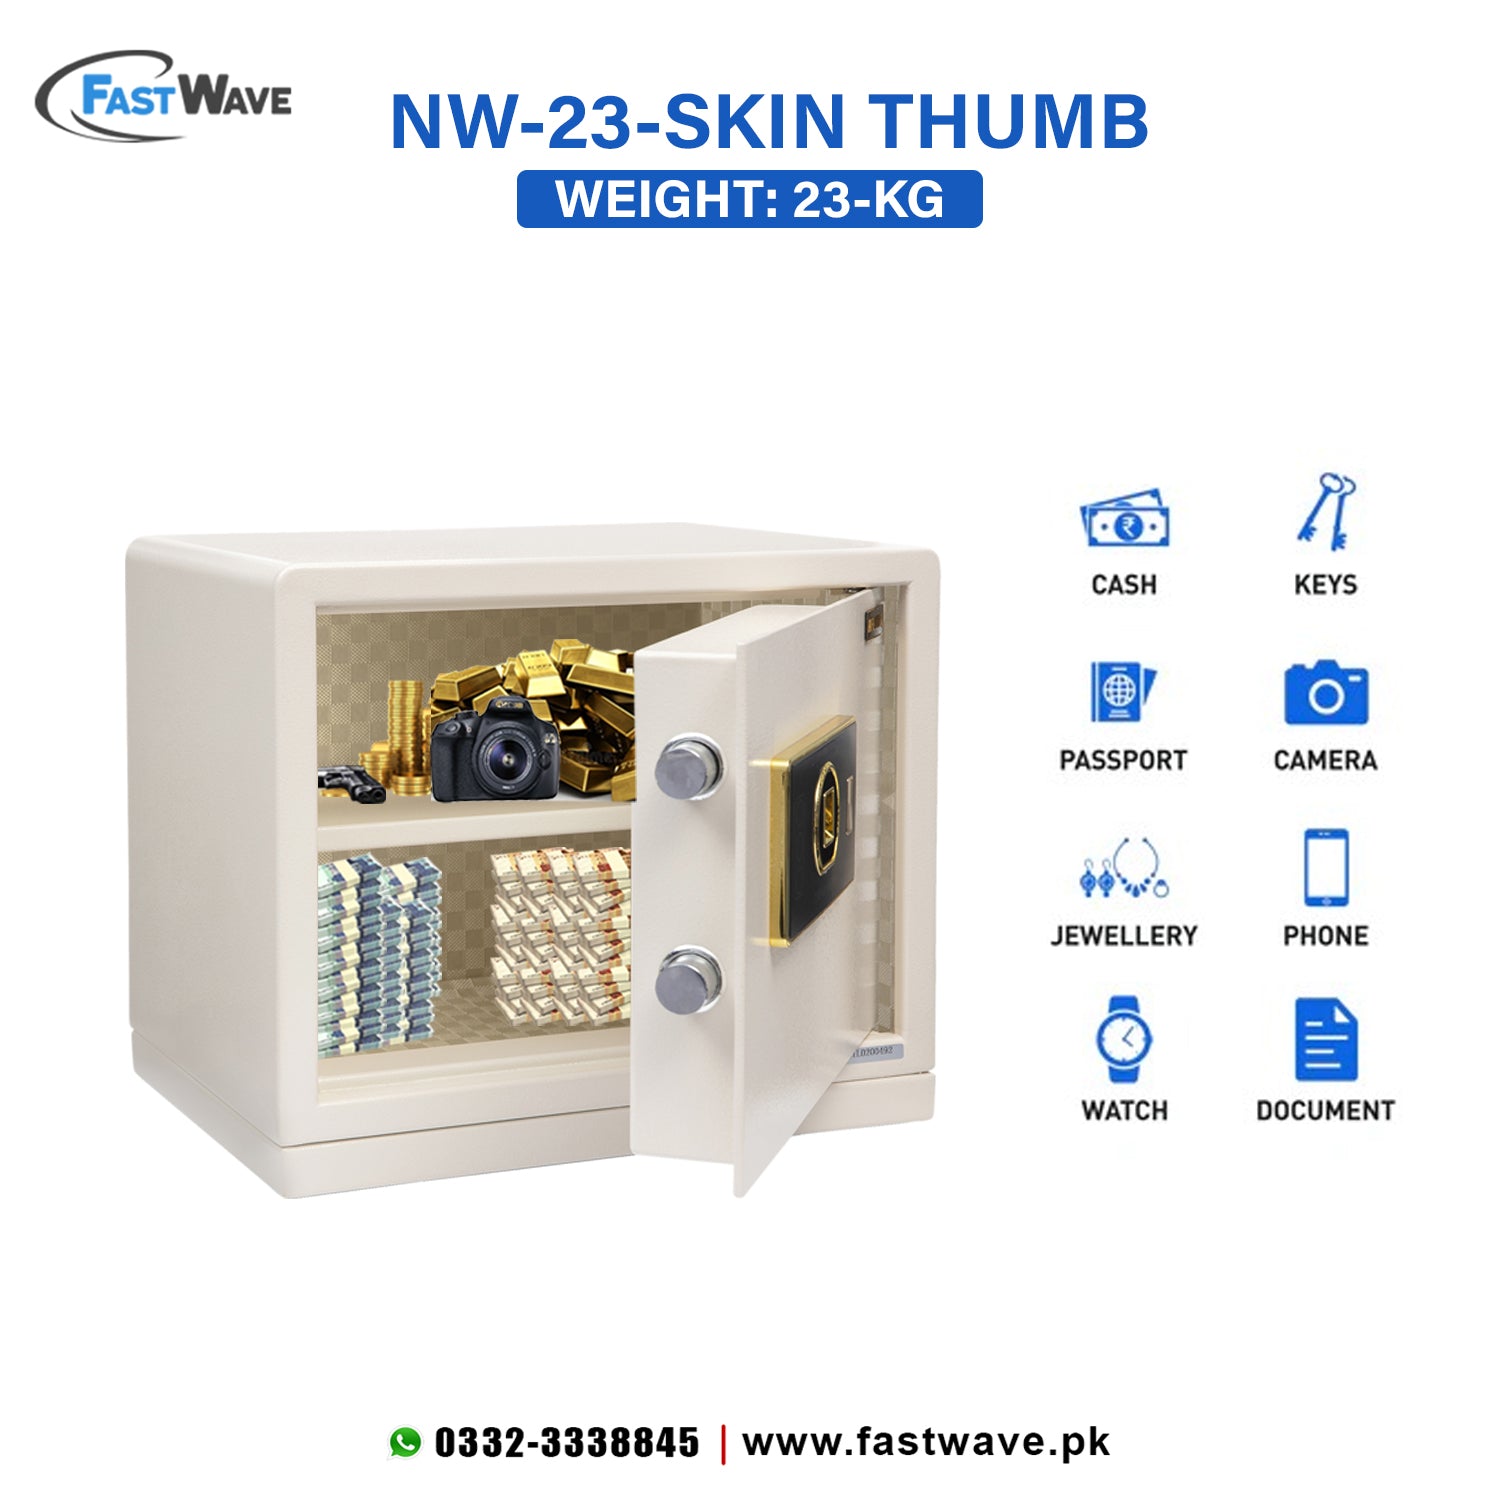 Digital Security Locker NW-KG-23 Skin Thumb